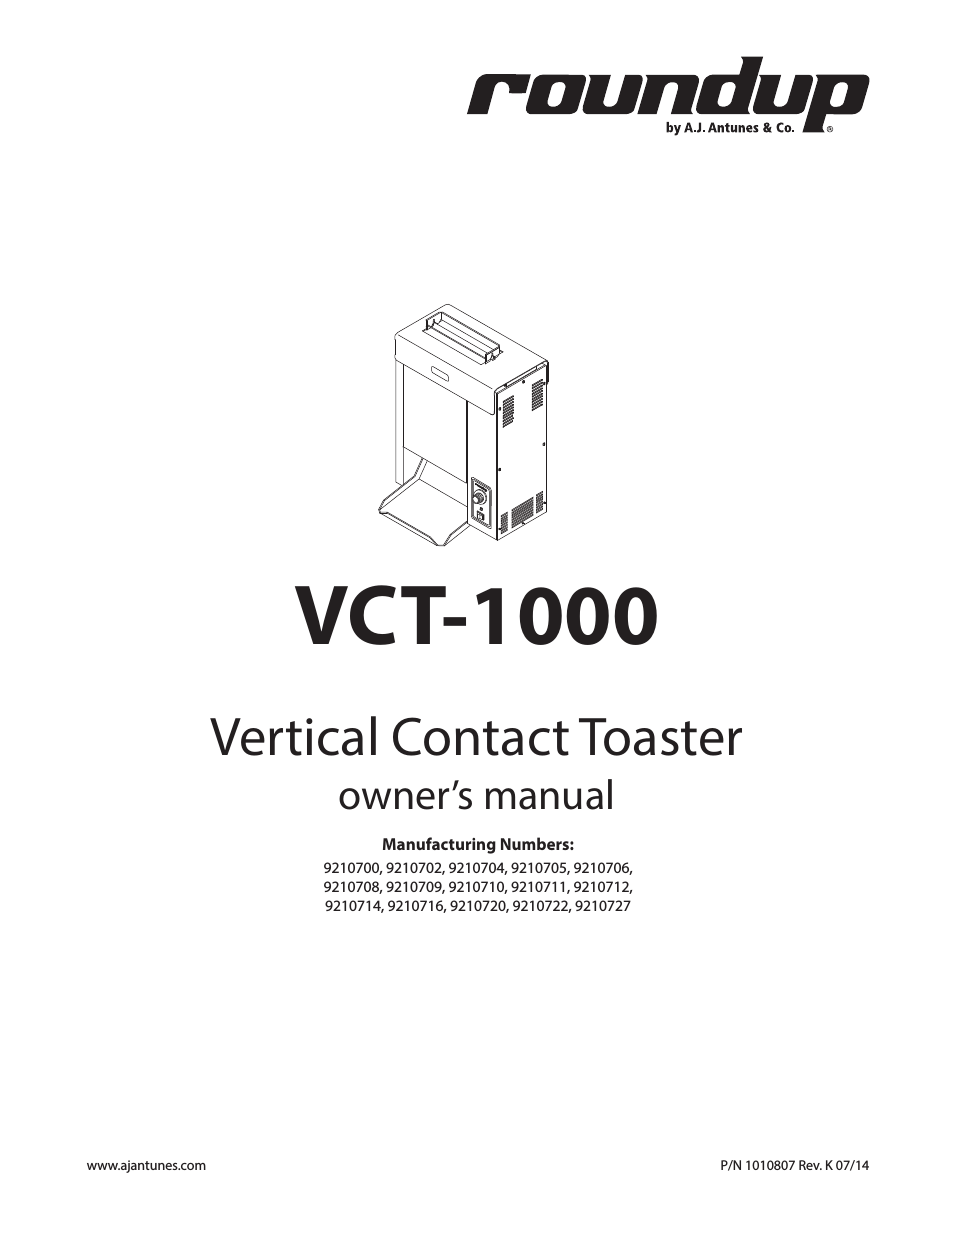 VCT-1000 9210716